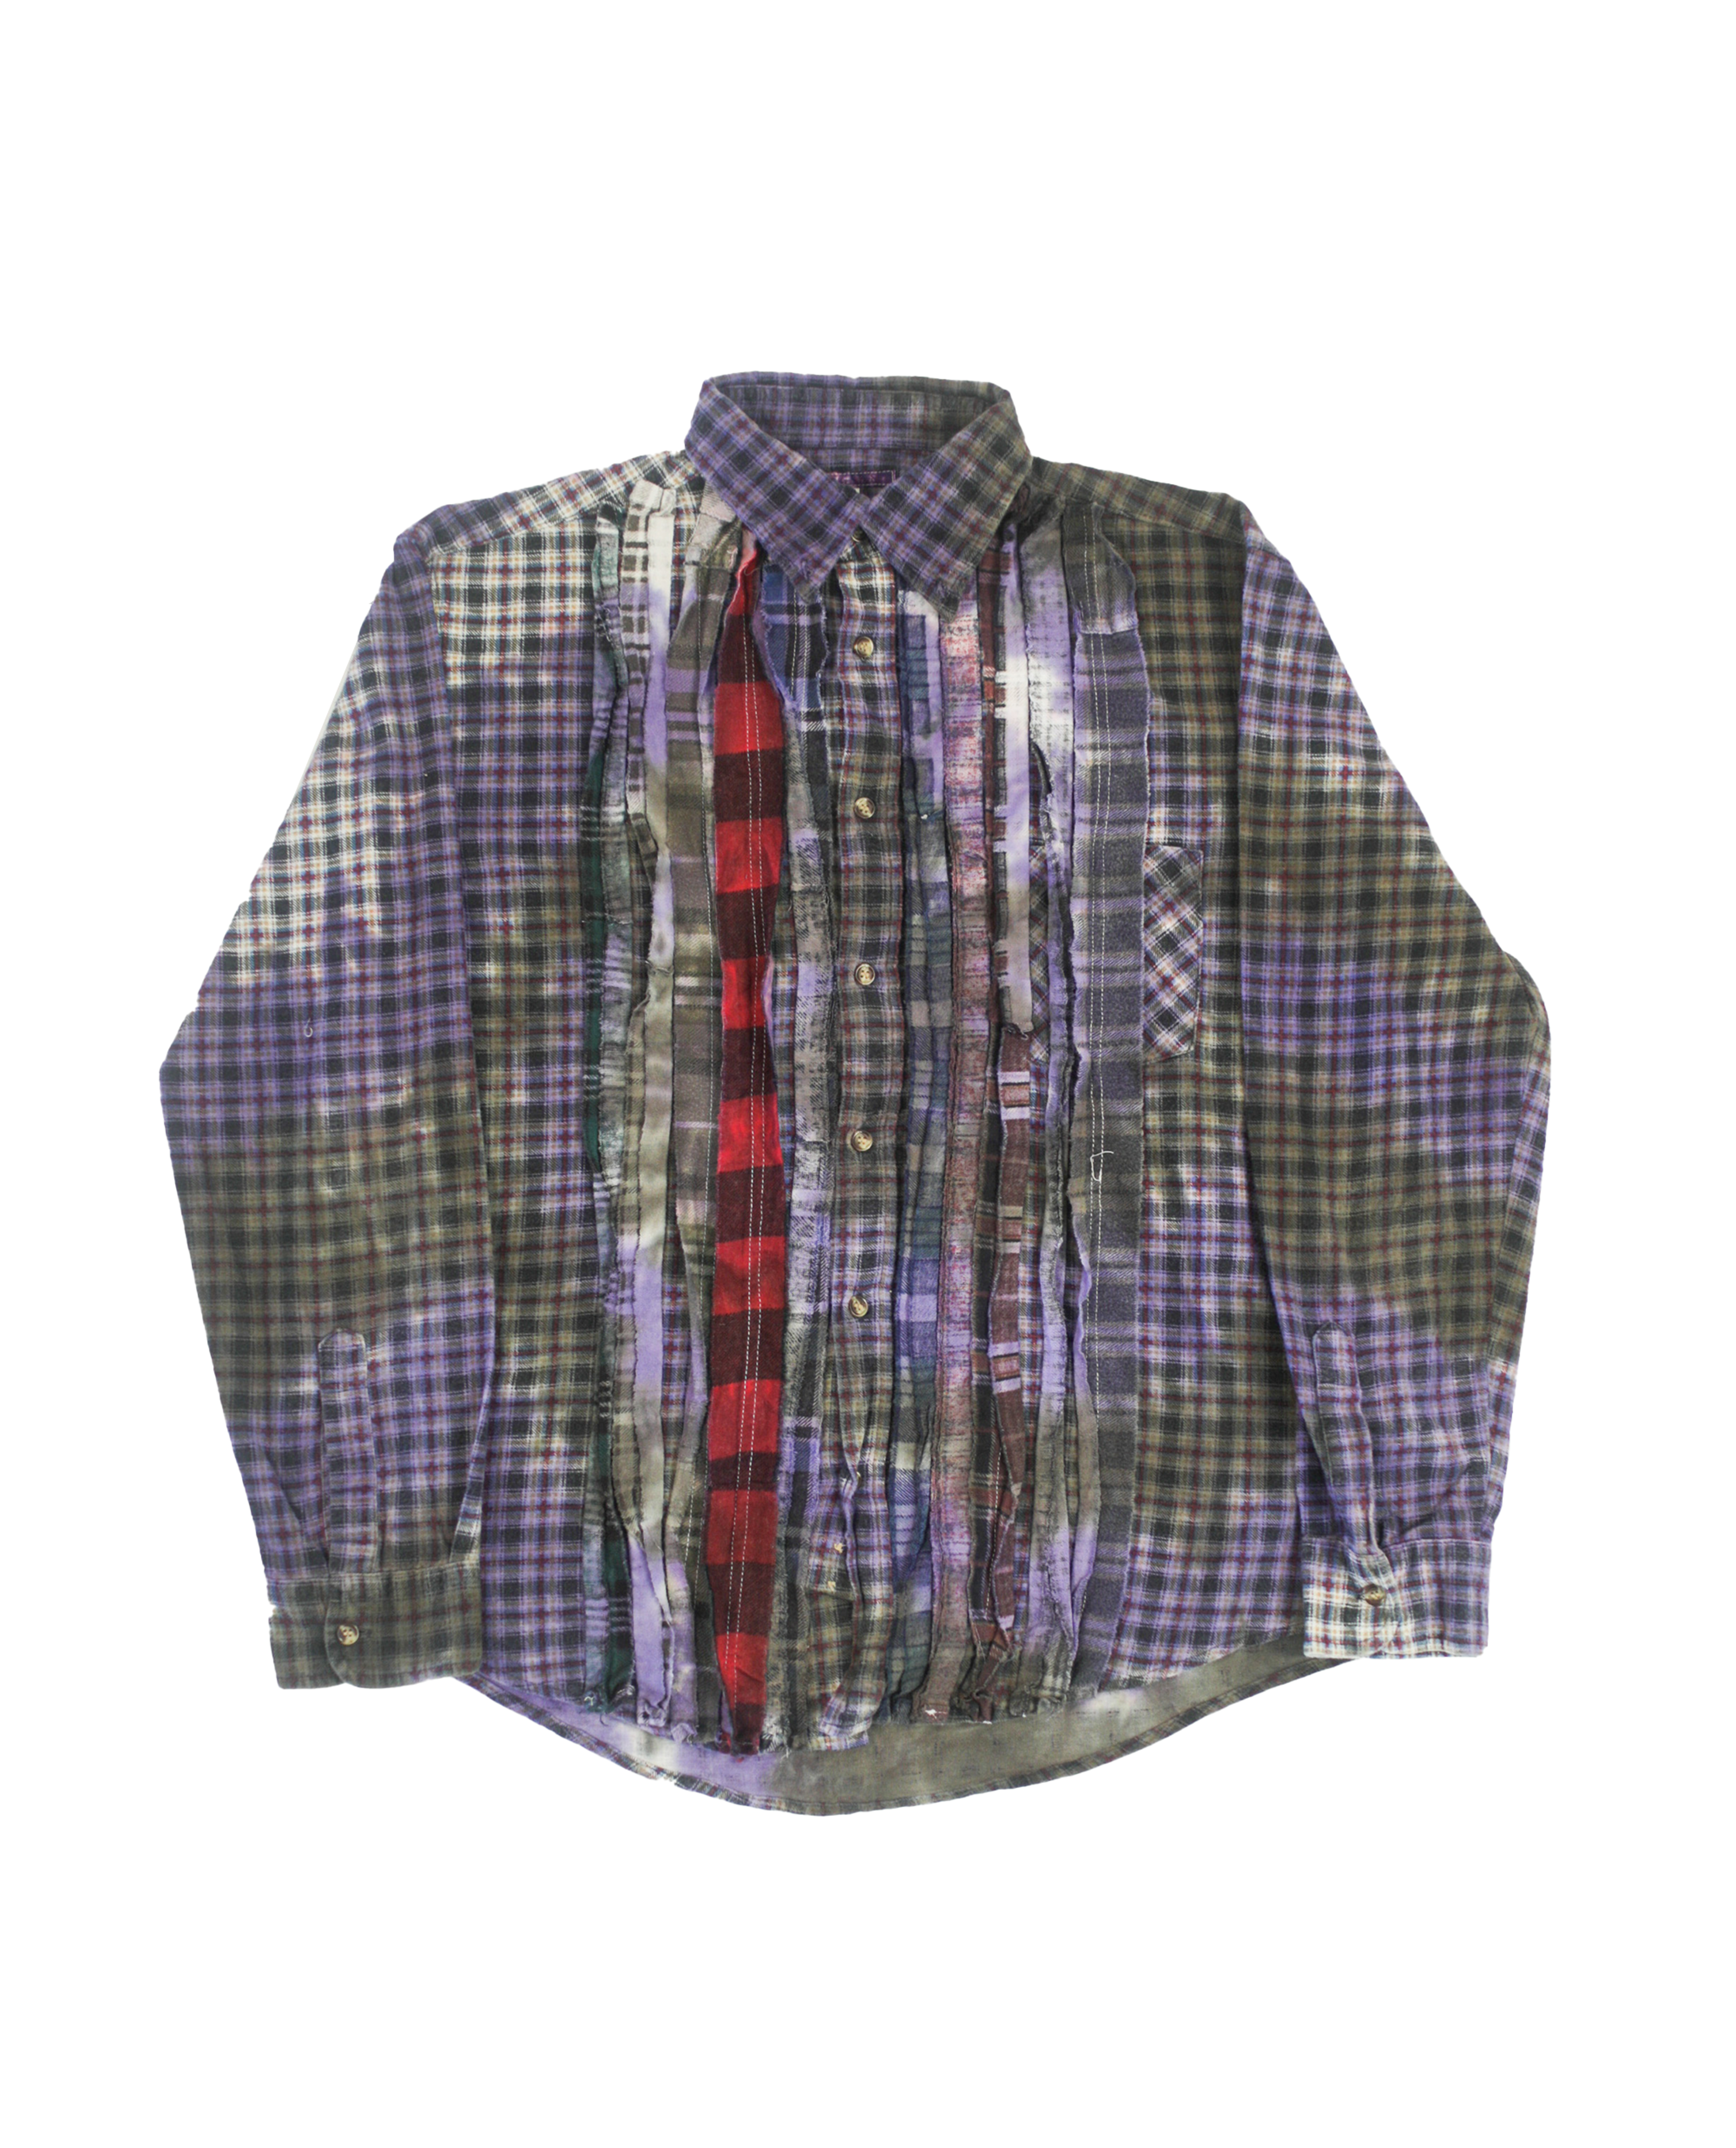 Alternate View 5 of Needles Flannel Shirt - Ribbon Shirt/Tie Dye